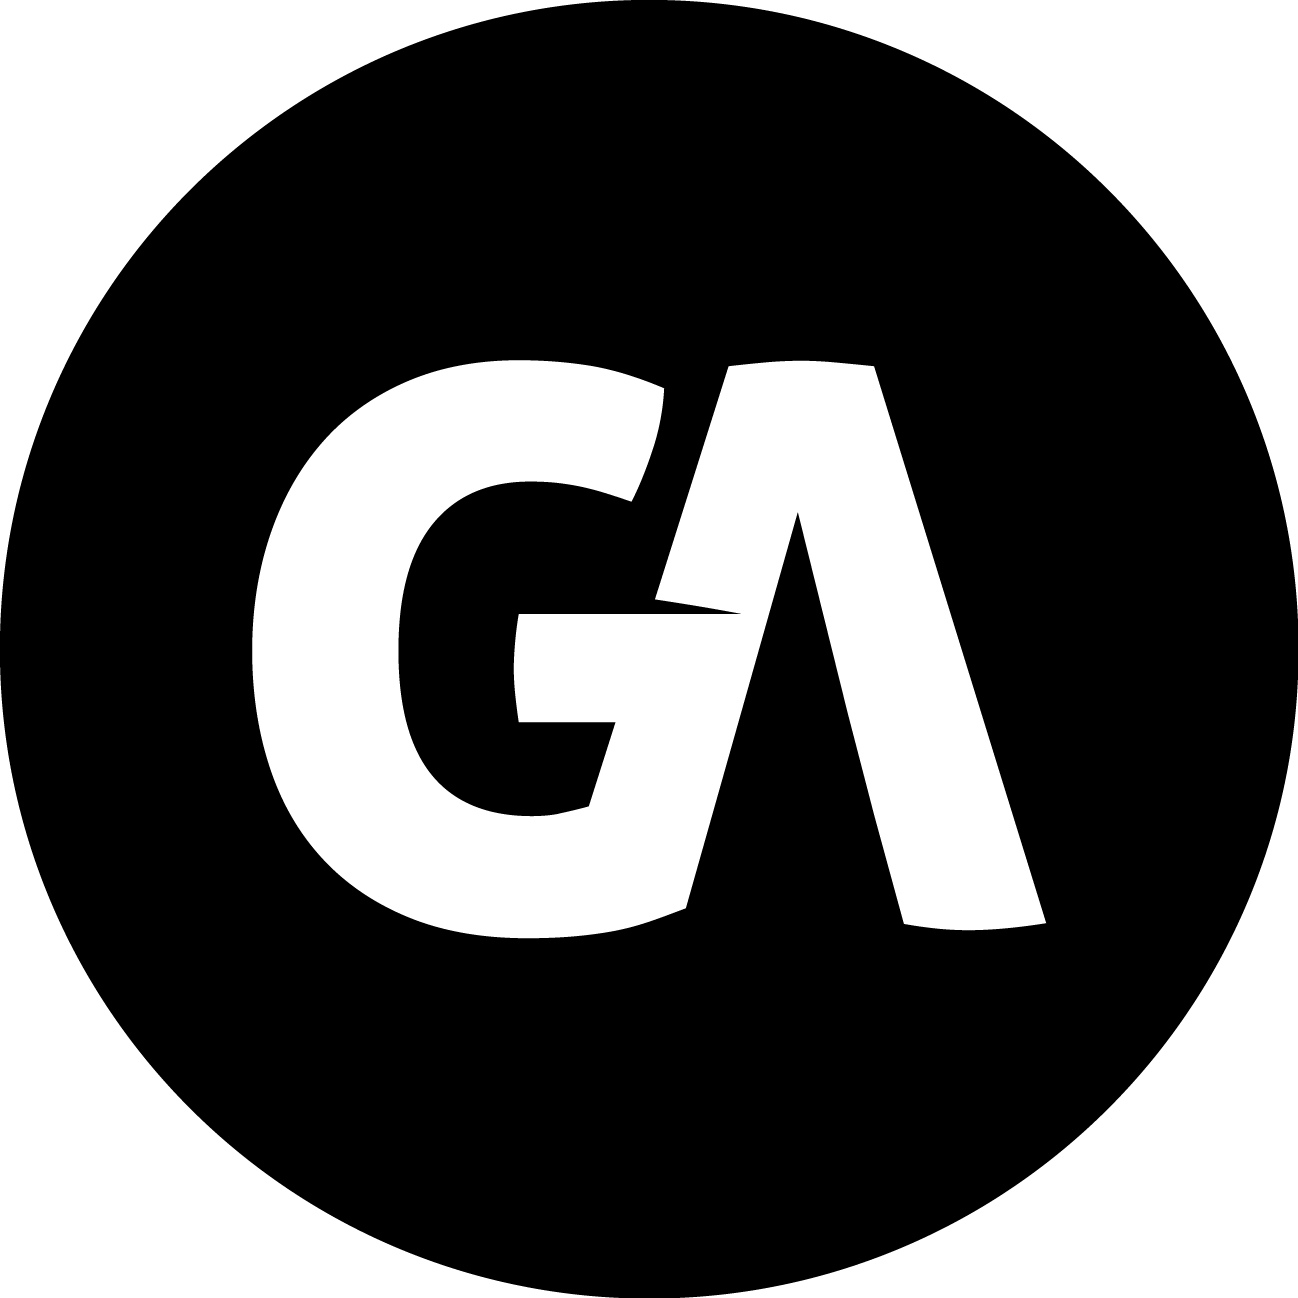 GameAnalytics logo